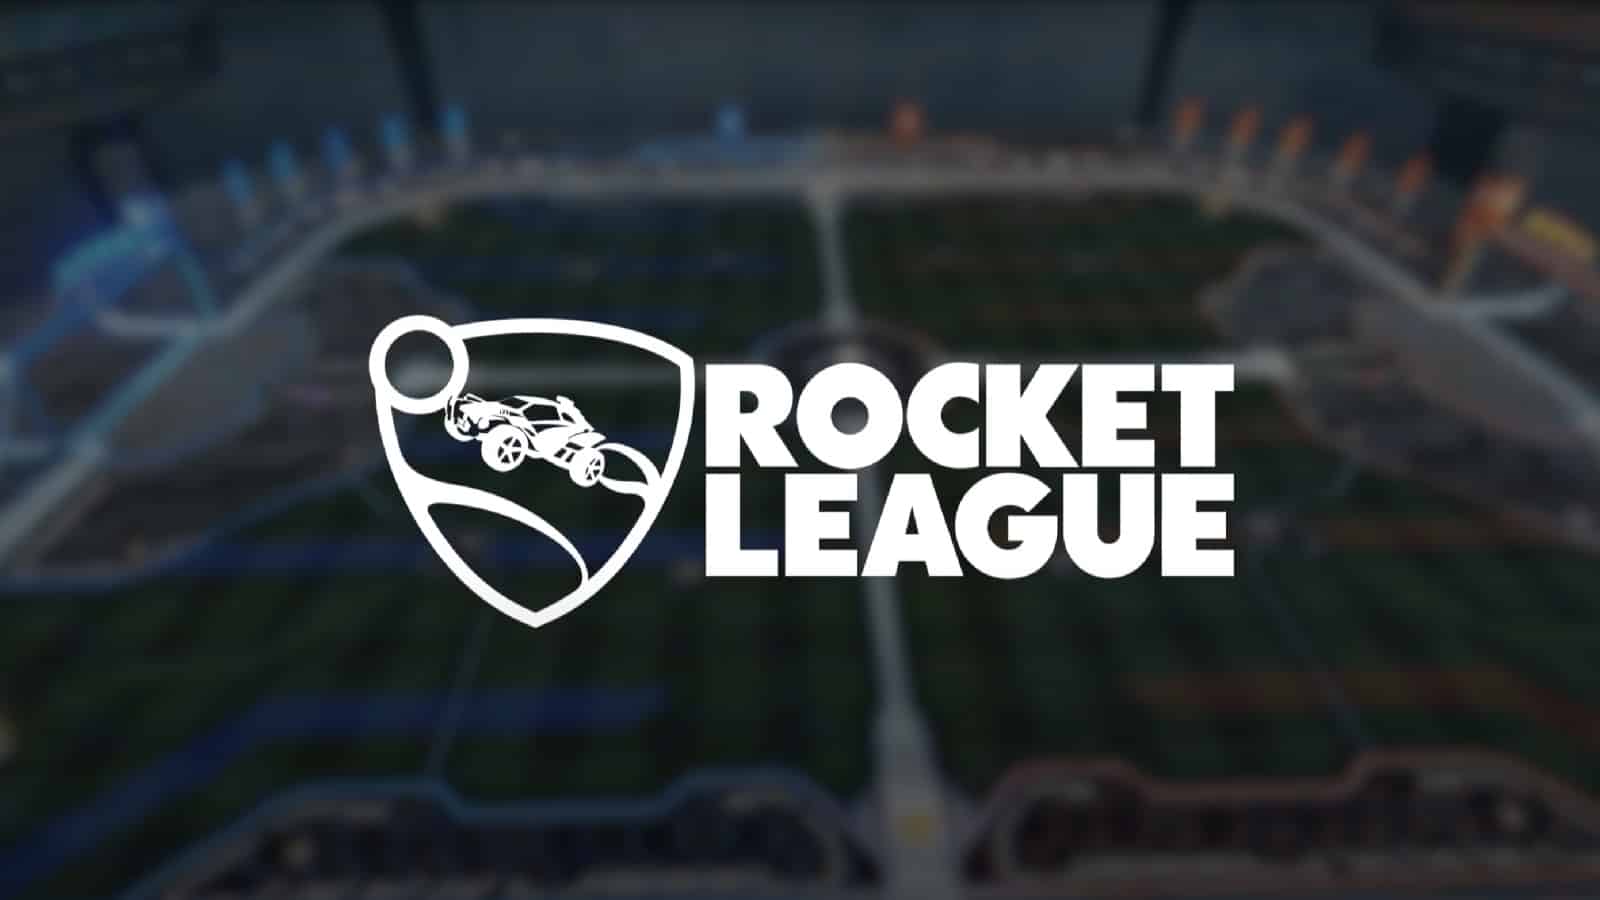 Rocket League text Samsung tournament